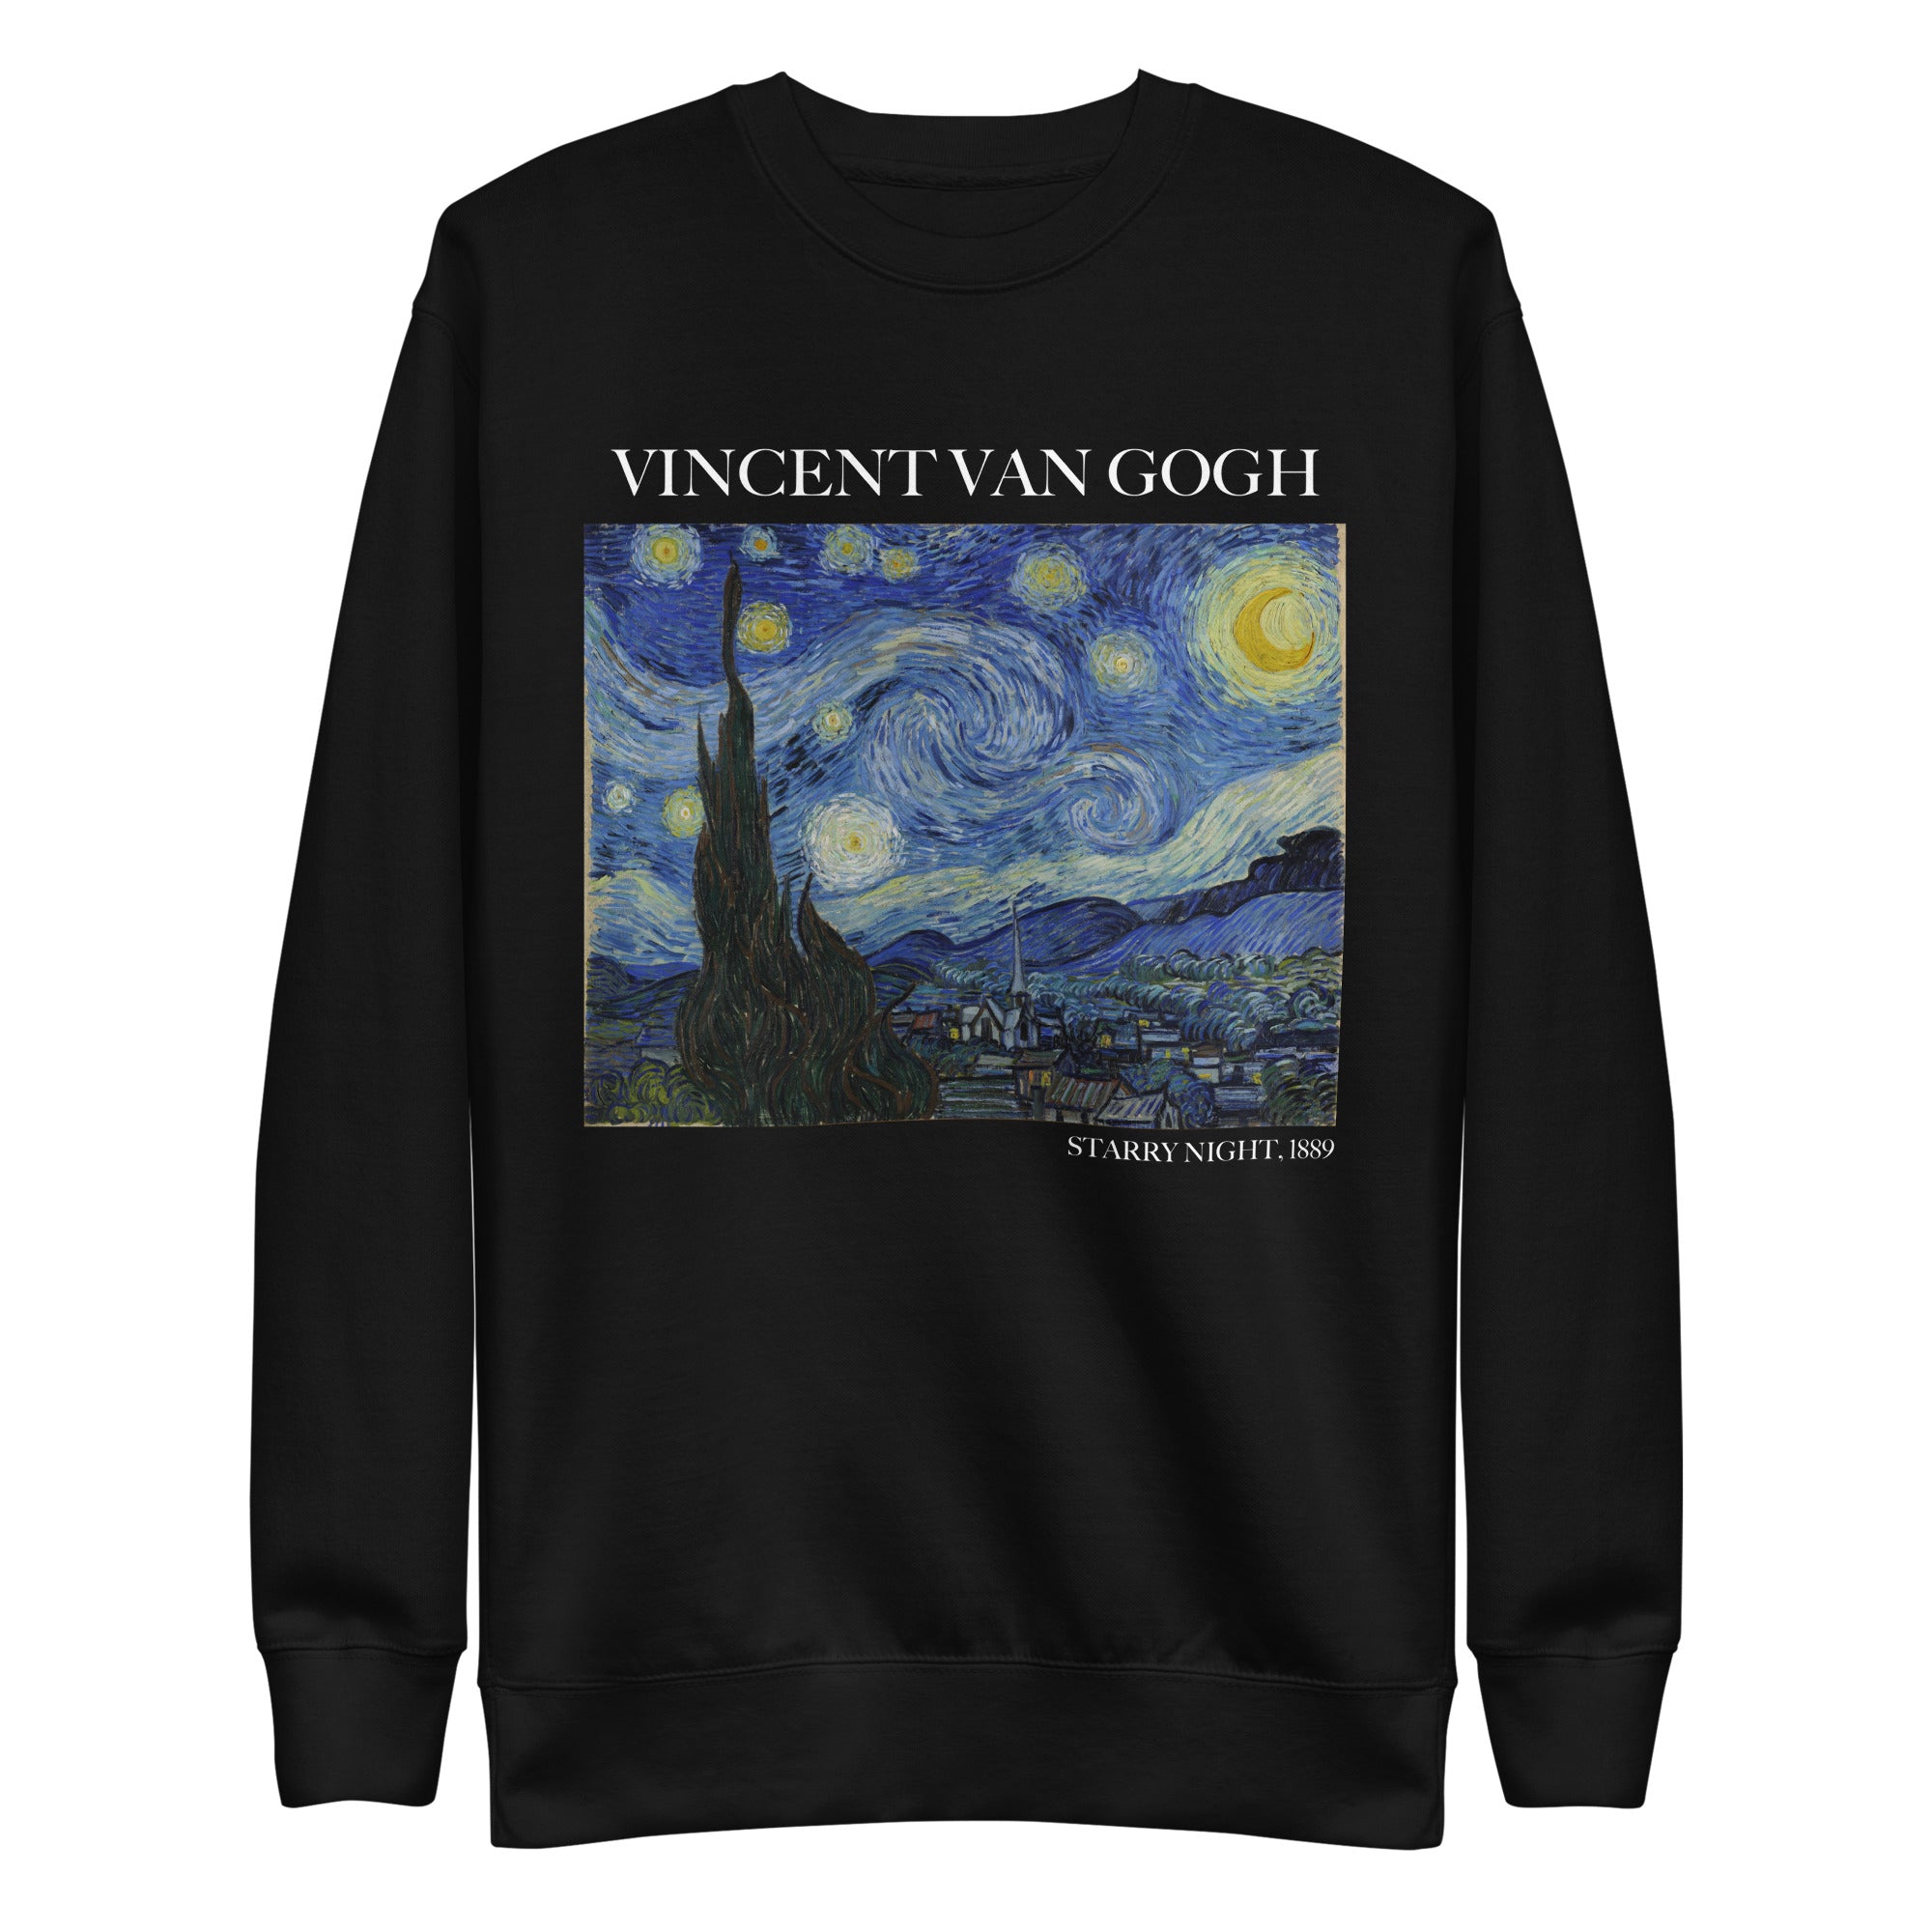 Vincent van Gogh 'Starry Night' Famous Painting Sweatshirt | Unisex Premium Sweatshirt